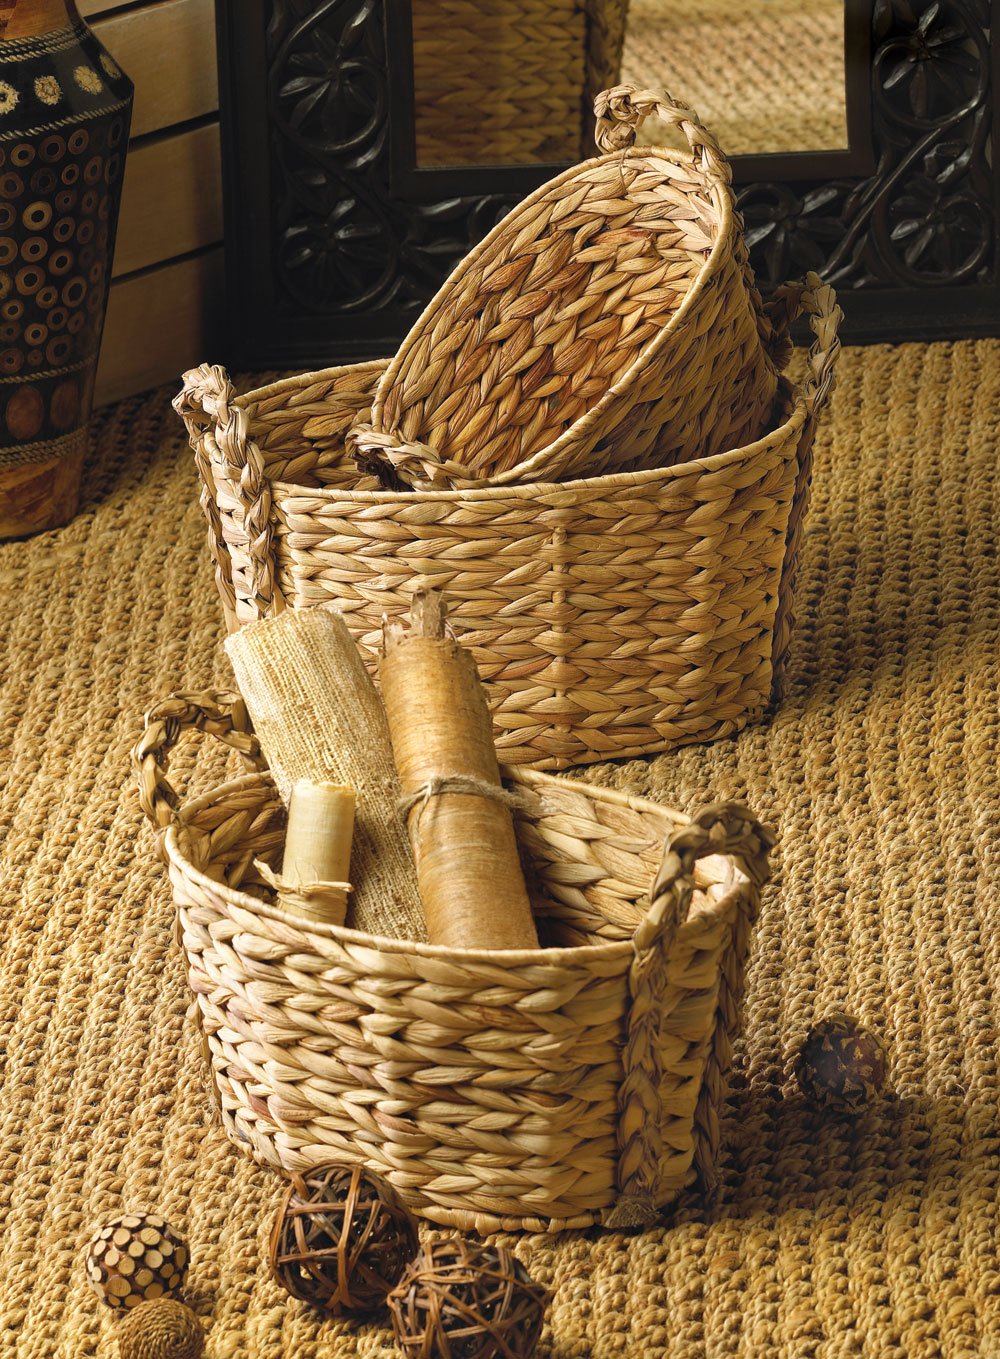 Rural woven nesting baskets